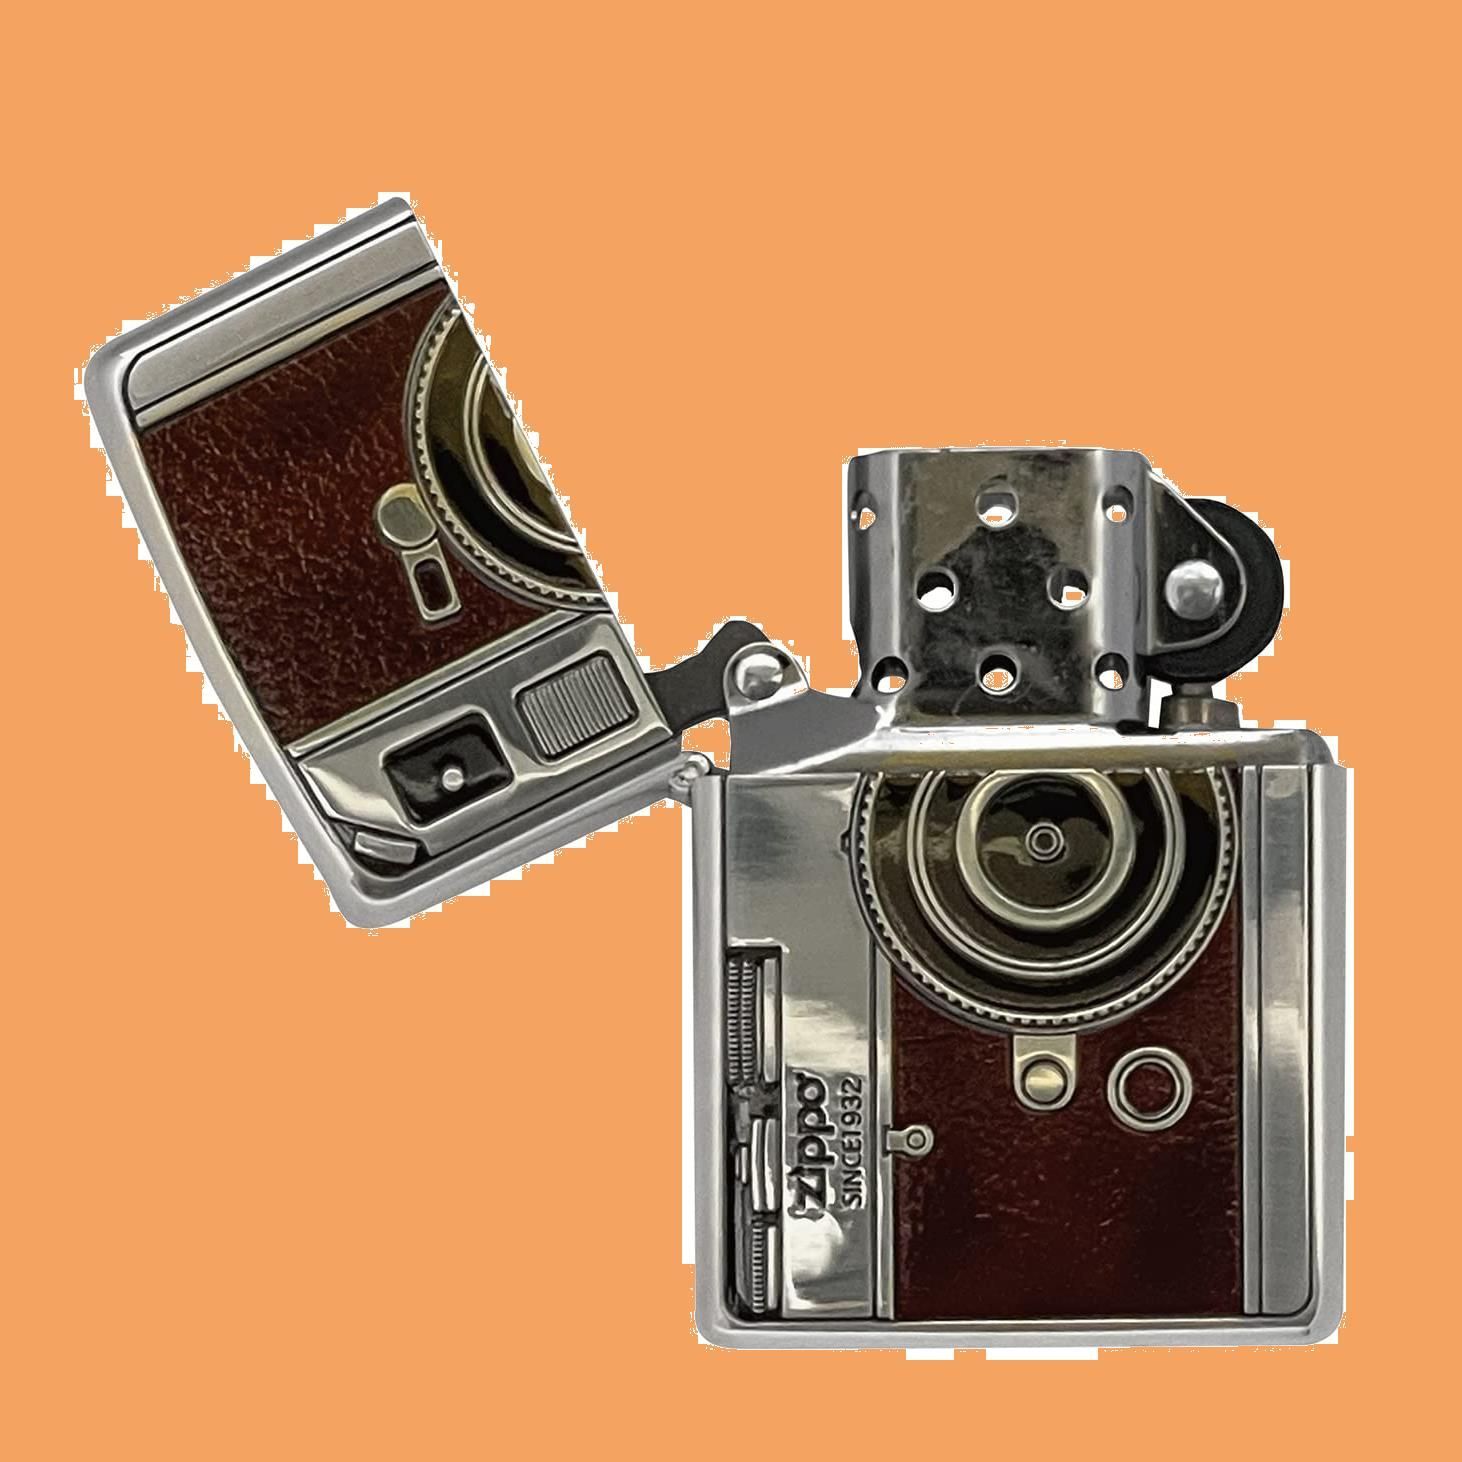 ZIPPO 2BK-CAMERA アンティーク カメラ